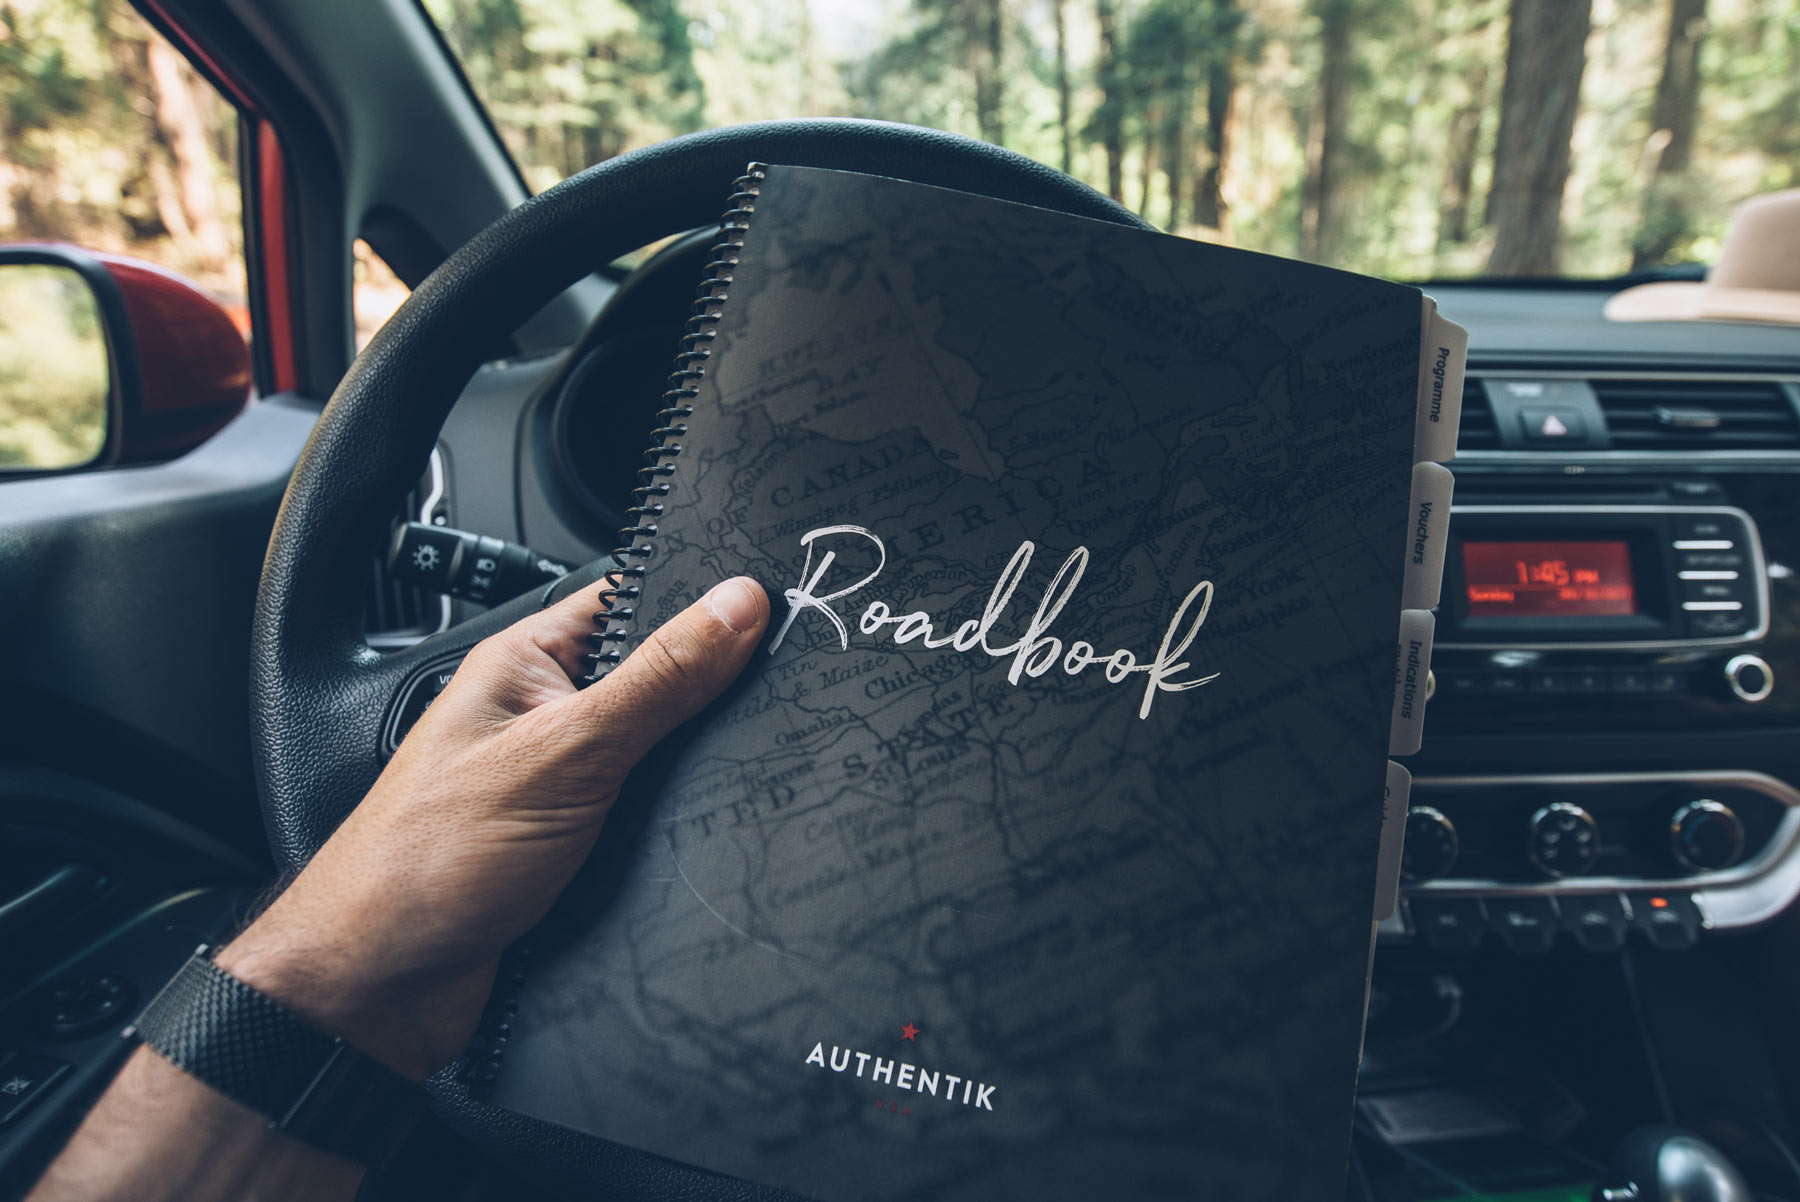 Road Book Authentik USA